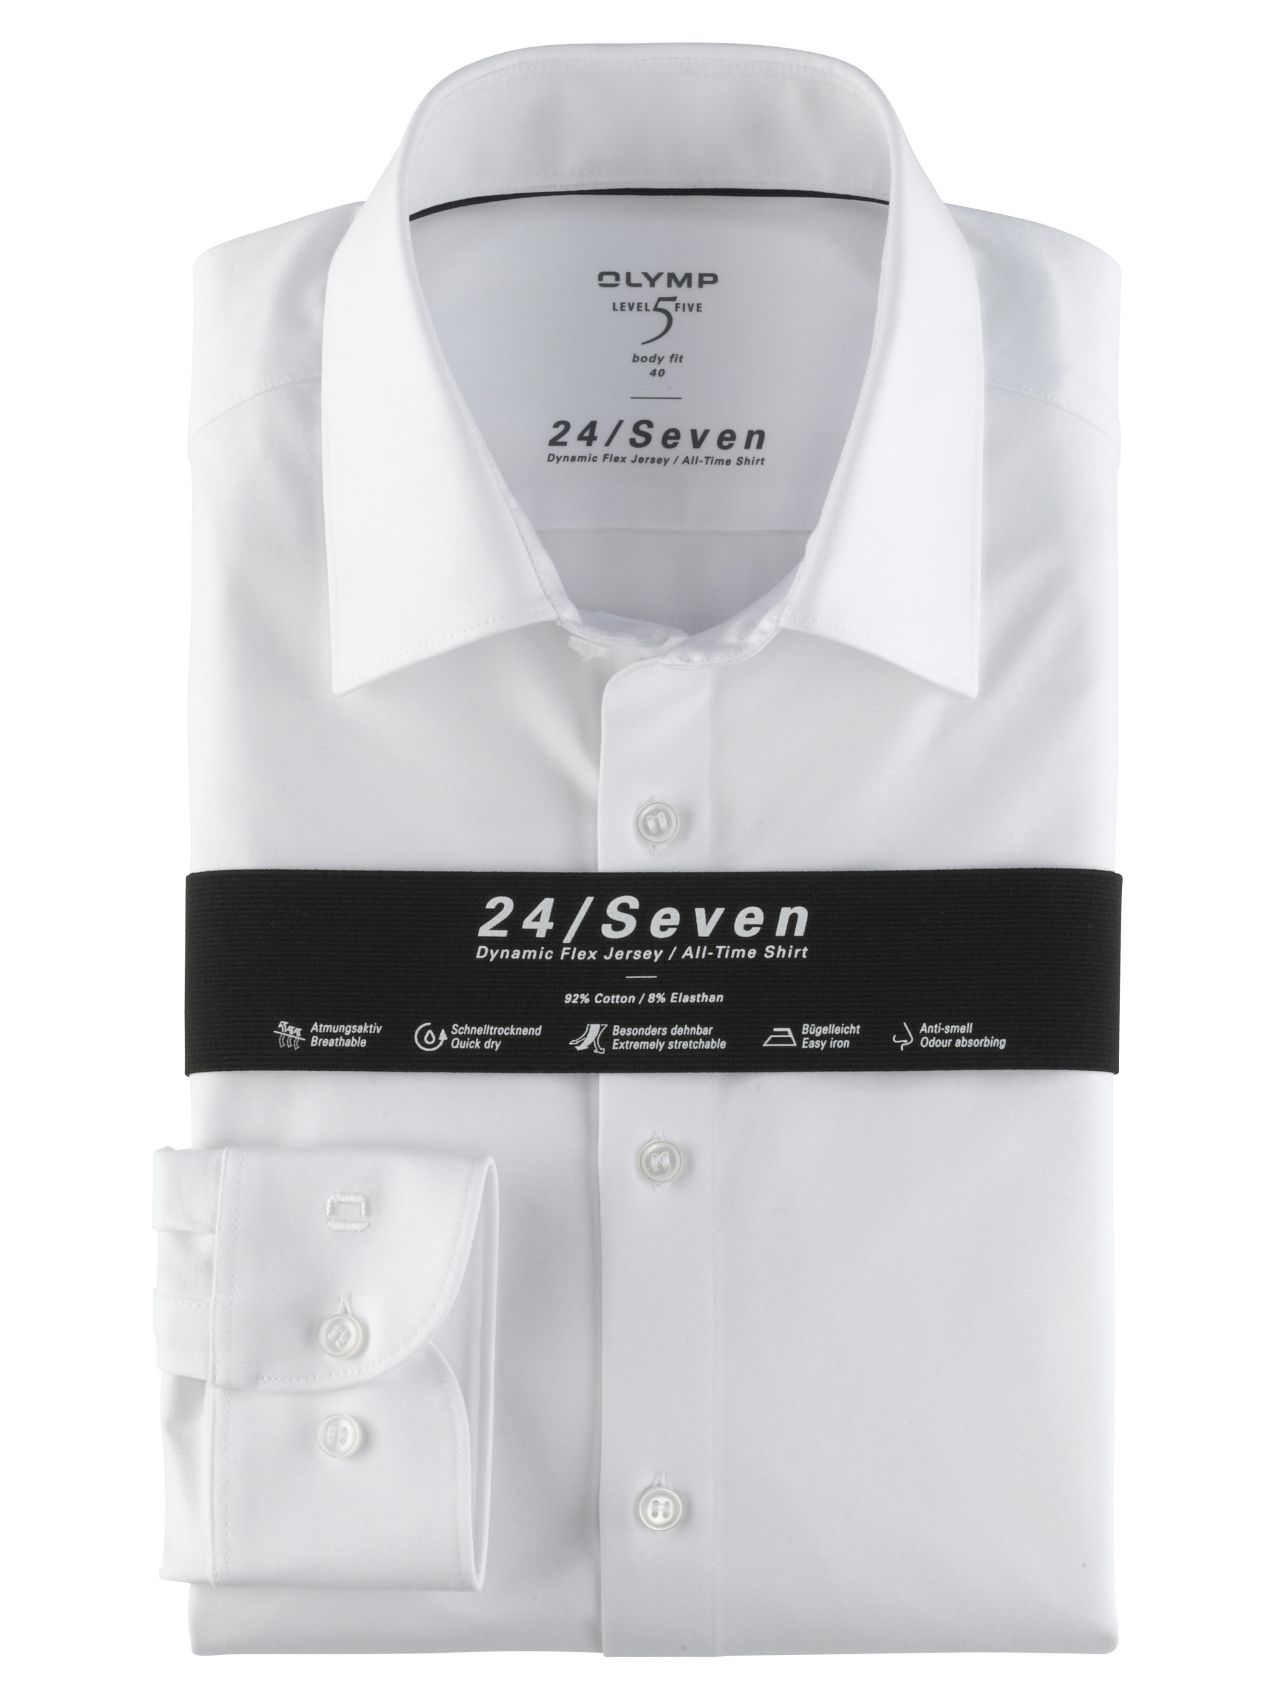 store 24/Seven sales Olymp man Jersey Shirt Flex Dynamic online